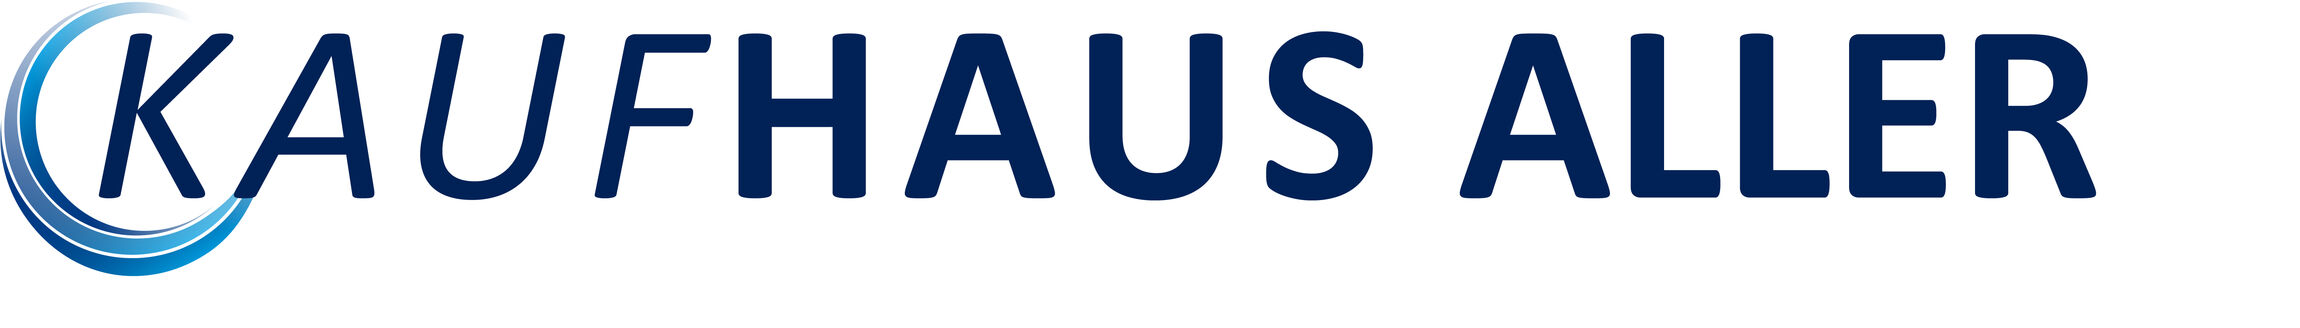 Kaufhaus-Aller-farbig-logo